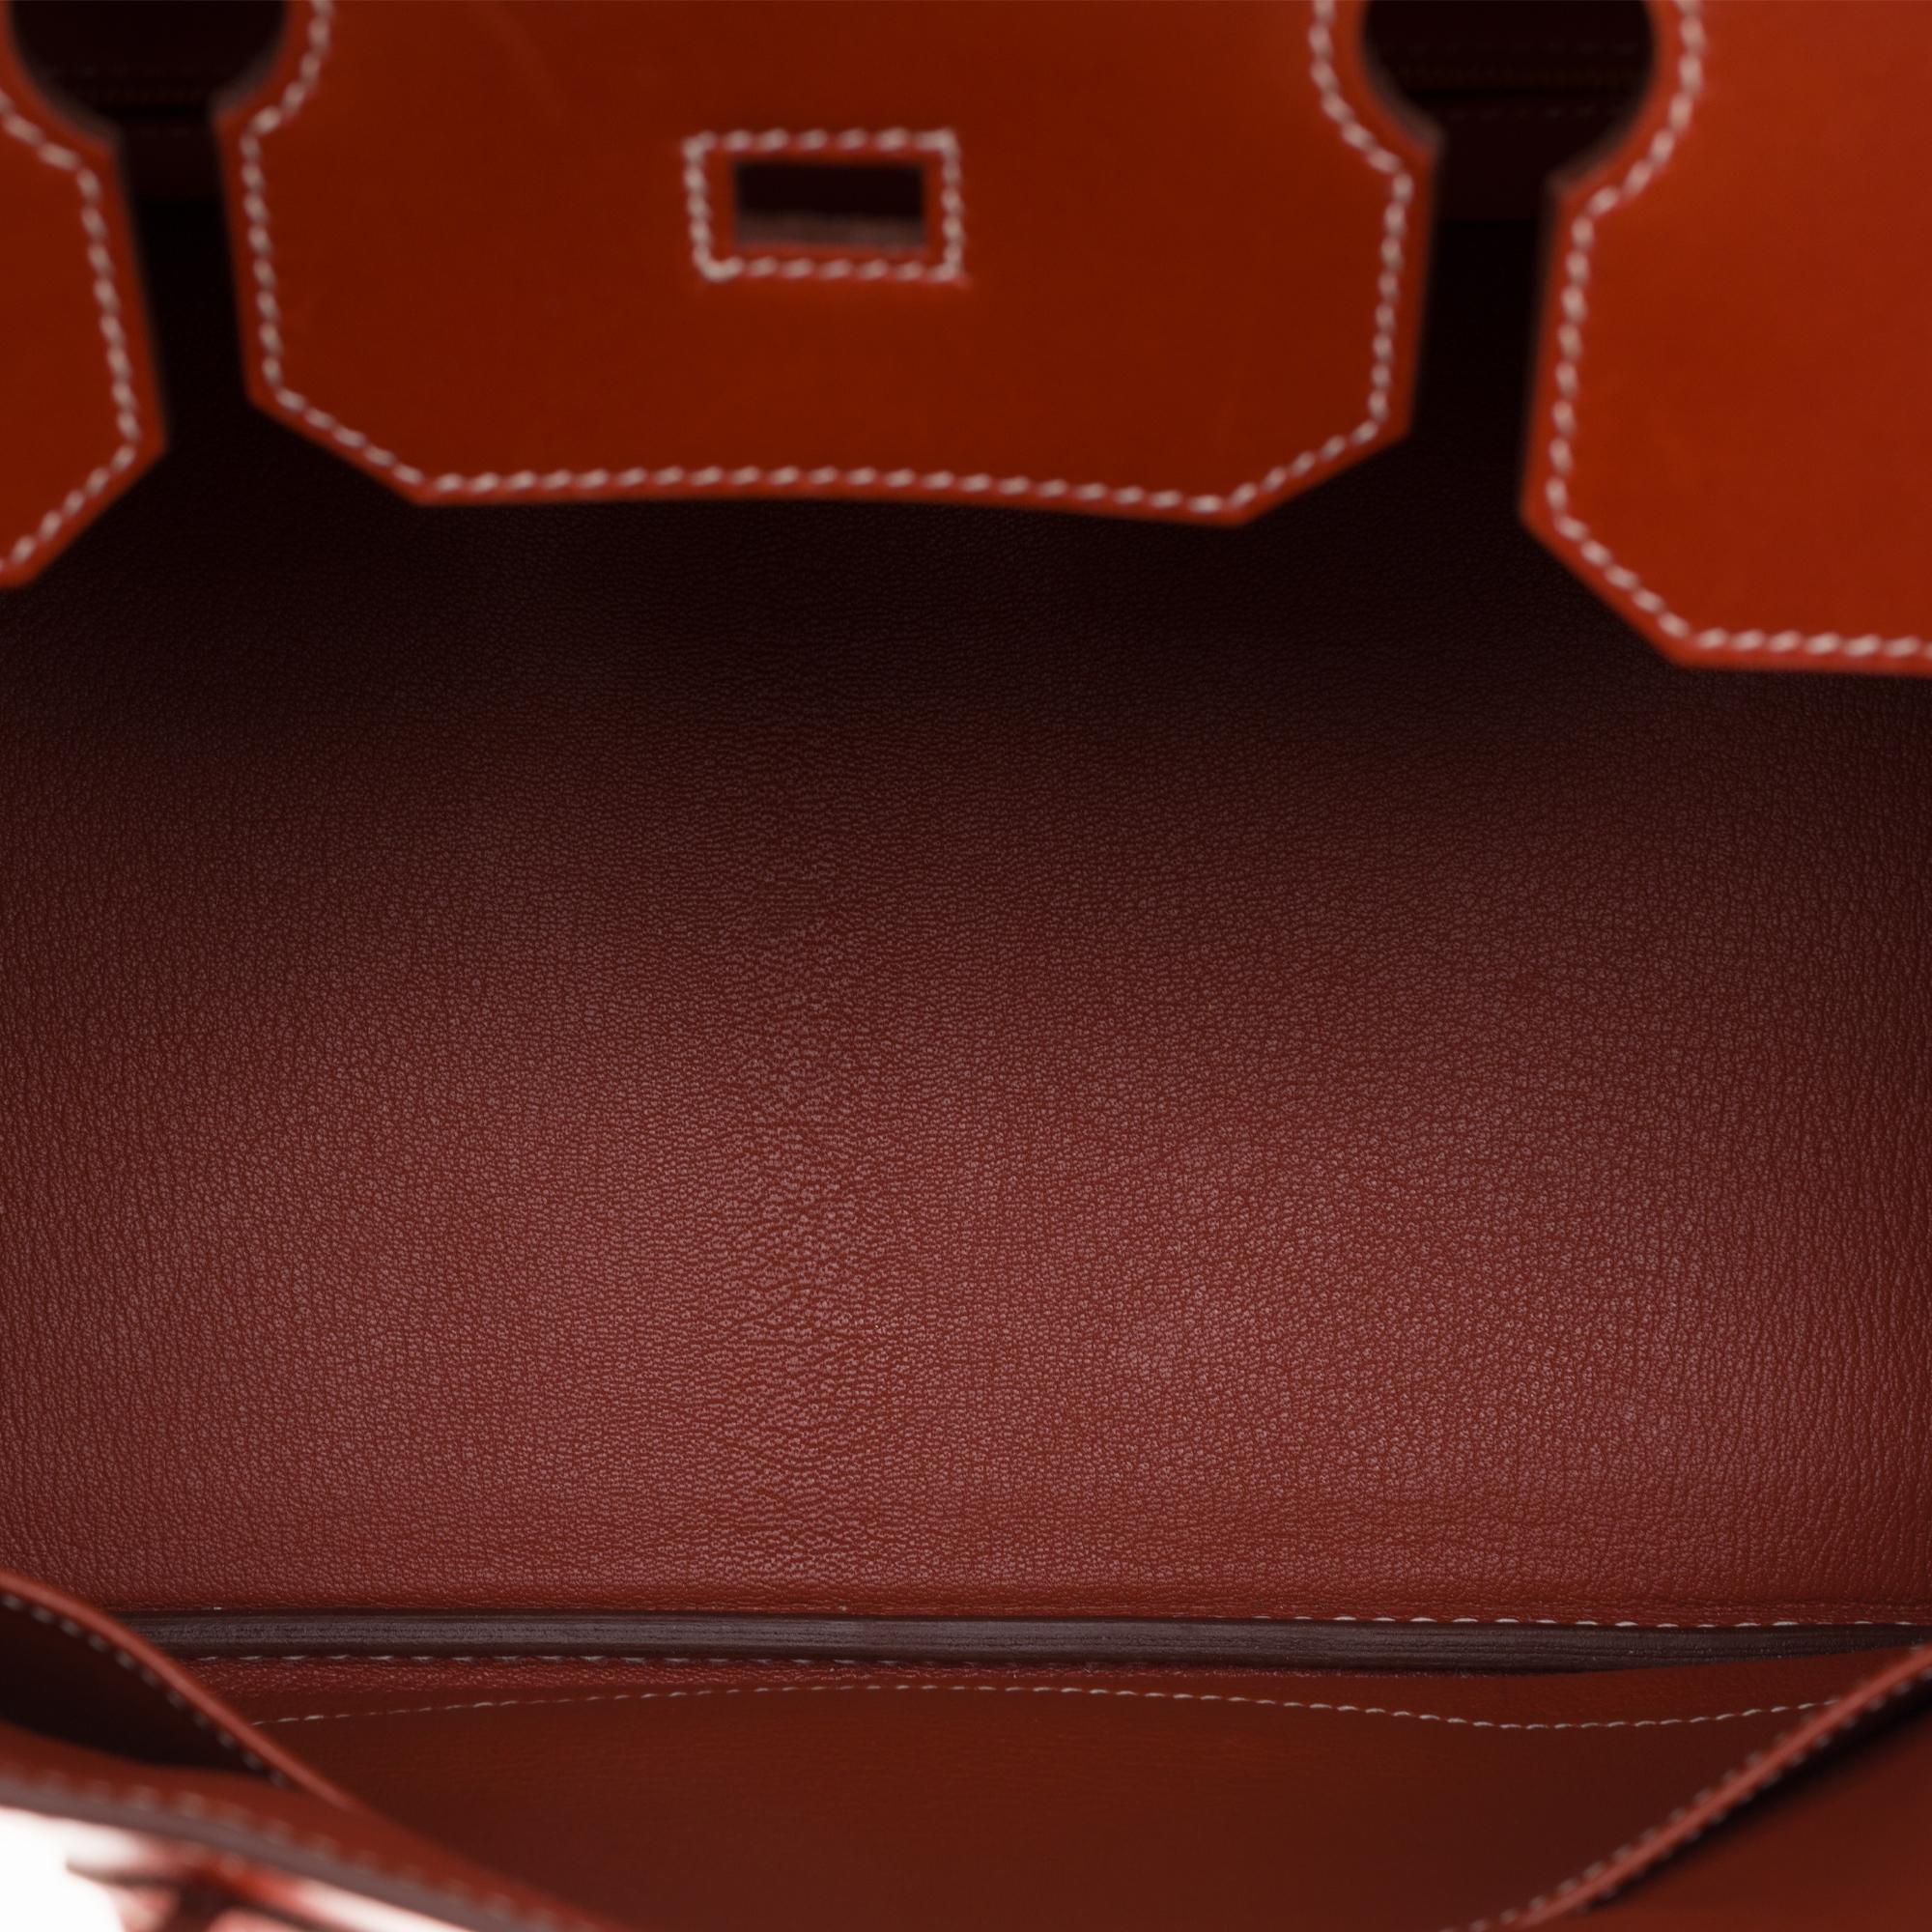 Women's RARE Hermès Birkin 30 handbag in brick box calf leather and gold hardware